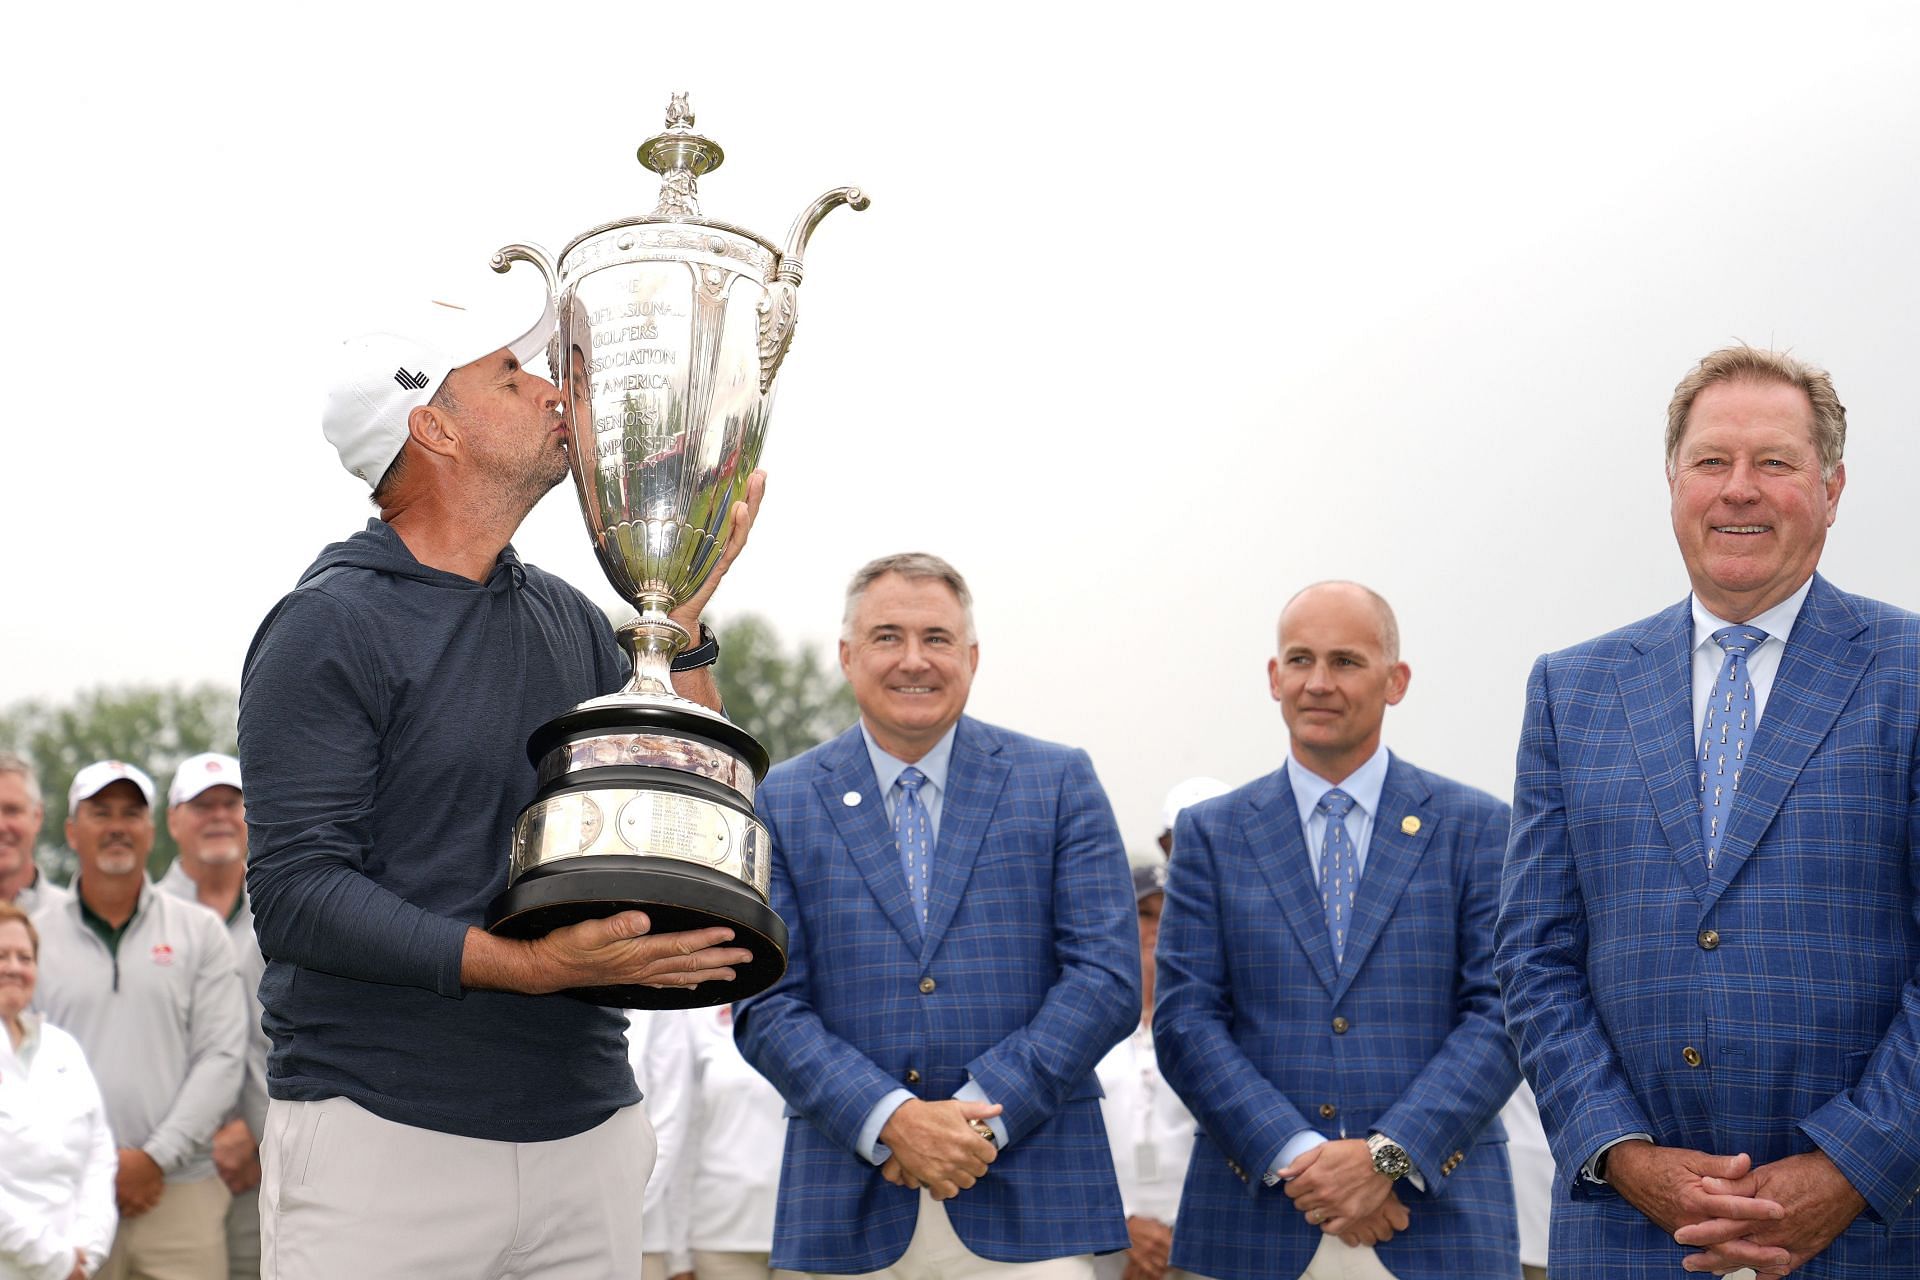 Richard Bland LIV Golf earnings How much has the English golfer won?